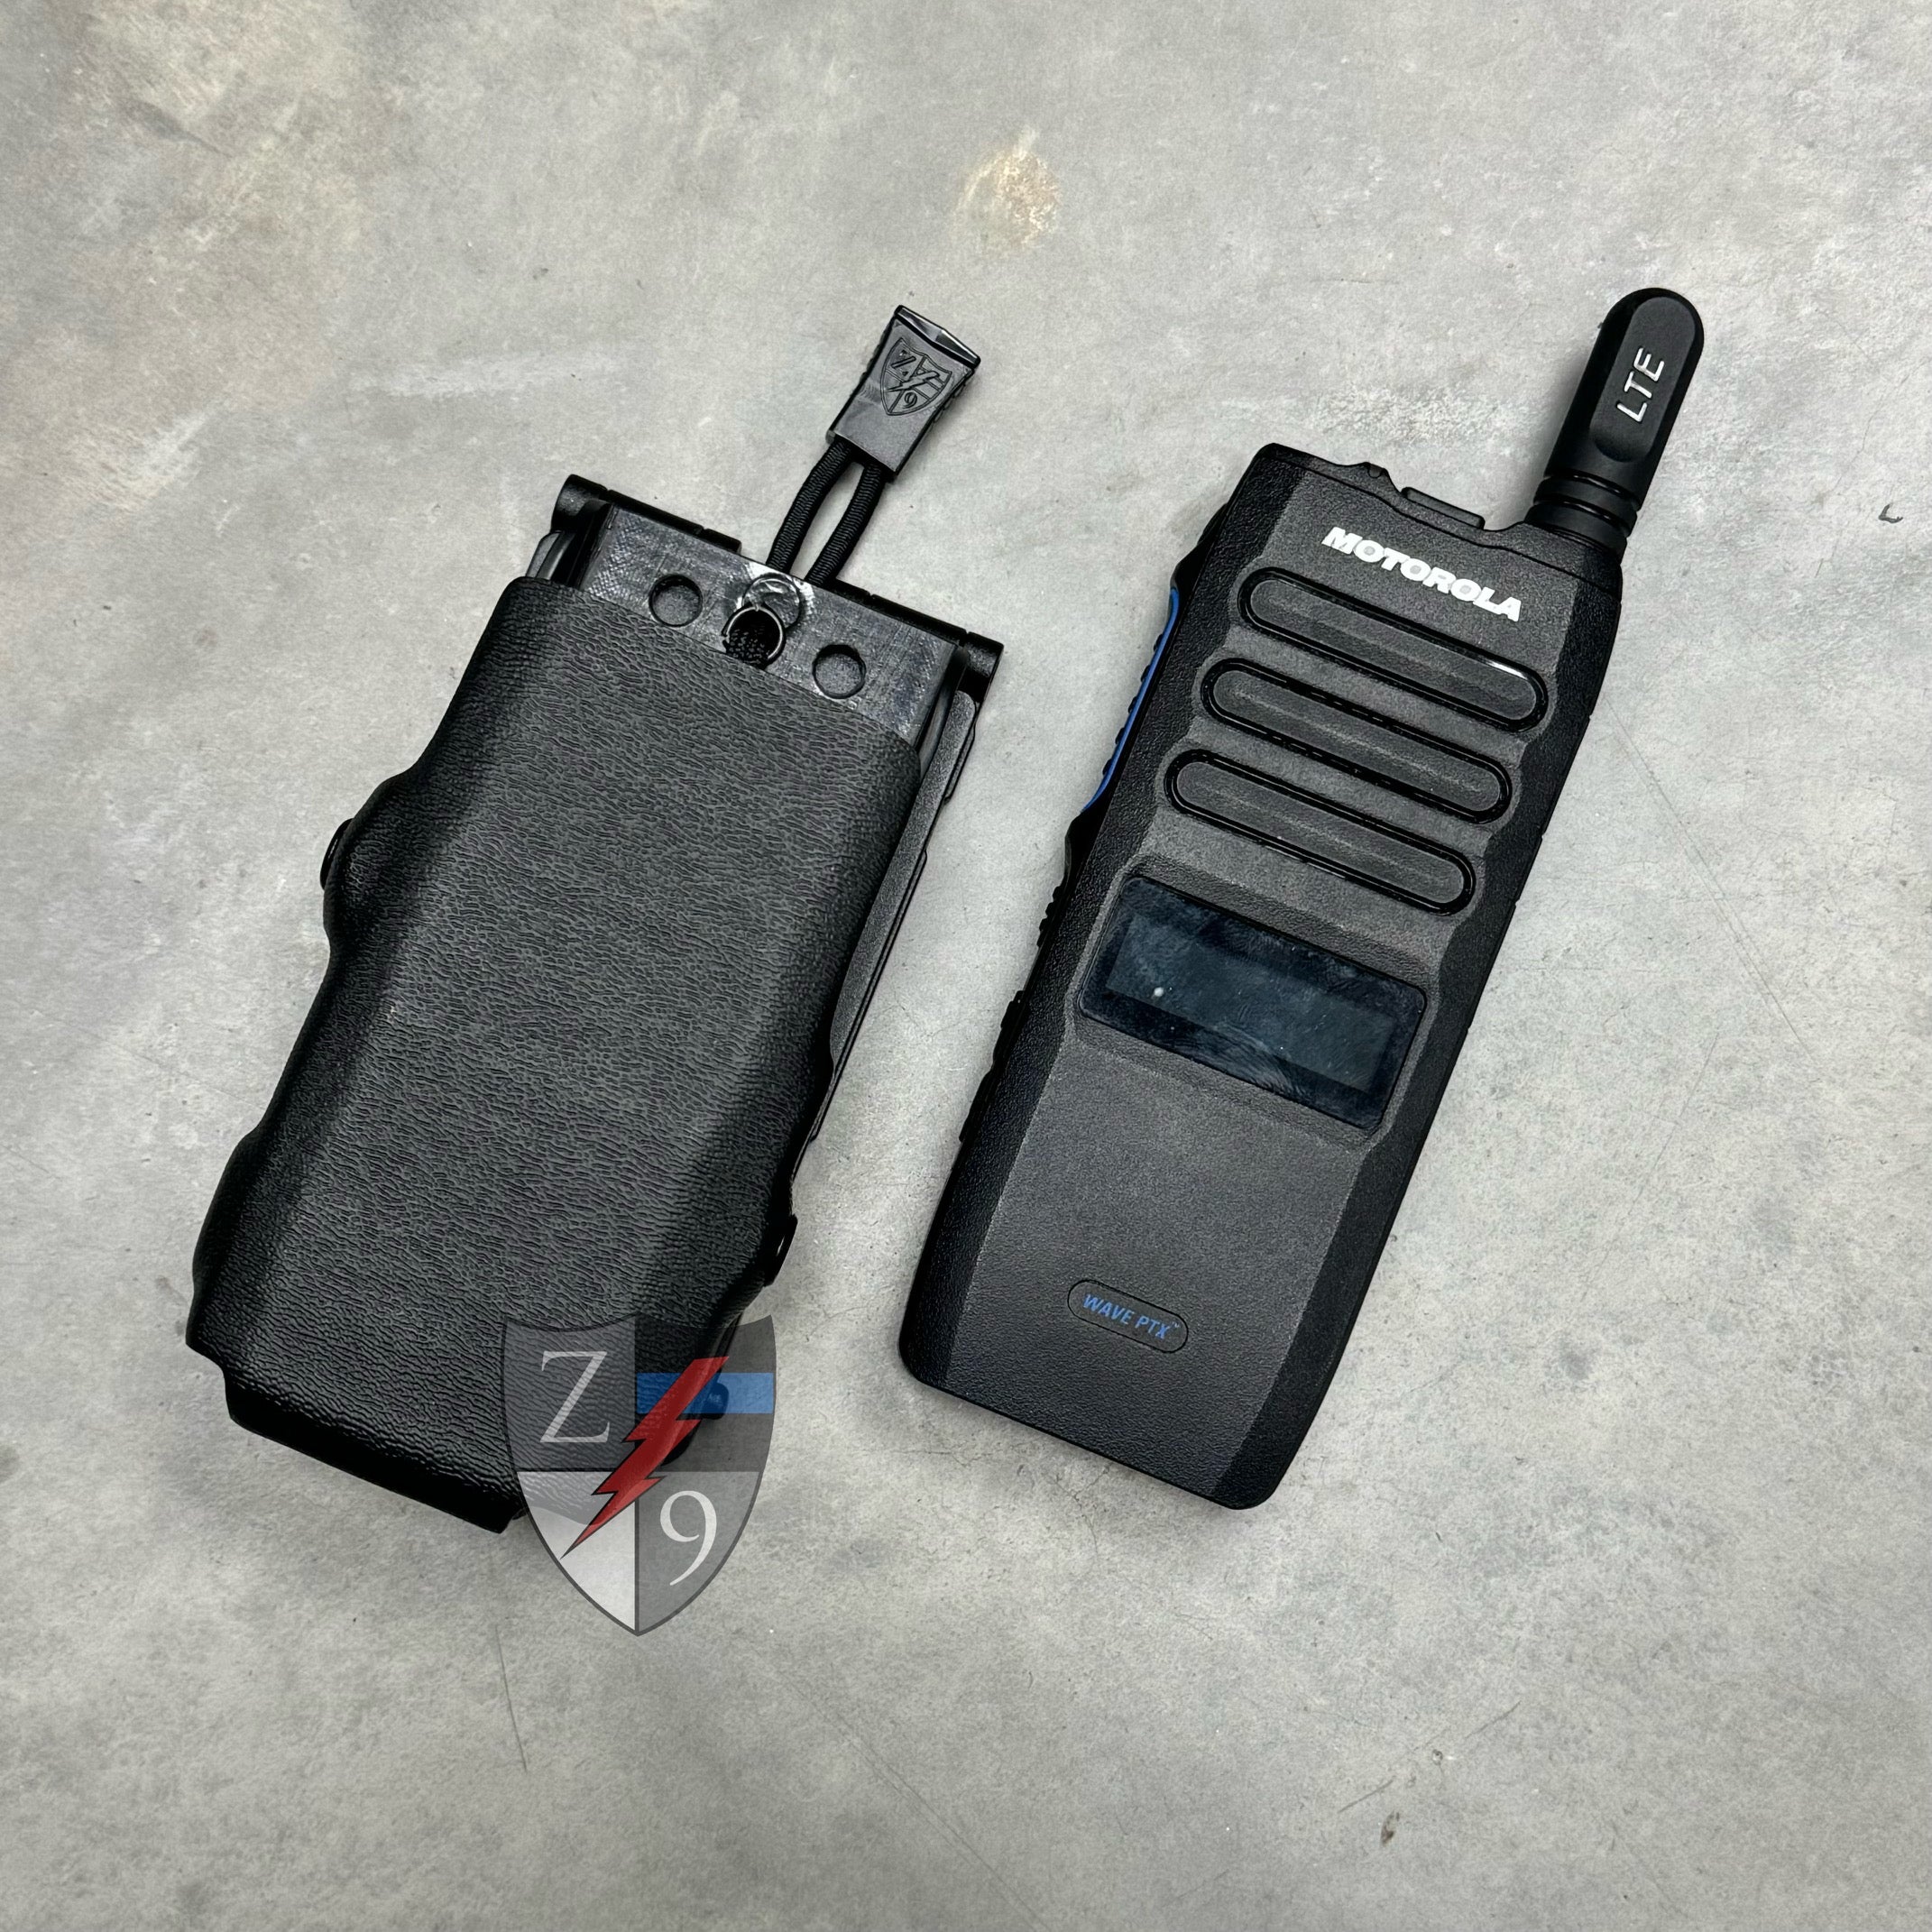 # Portable Radio Case - MOTOROLA XTS and TLK SERIES